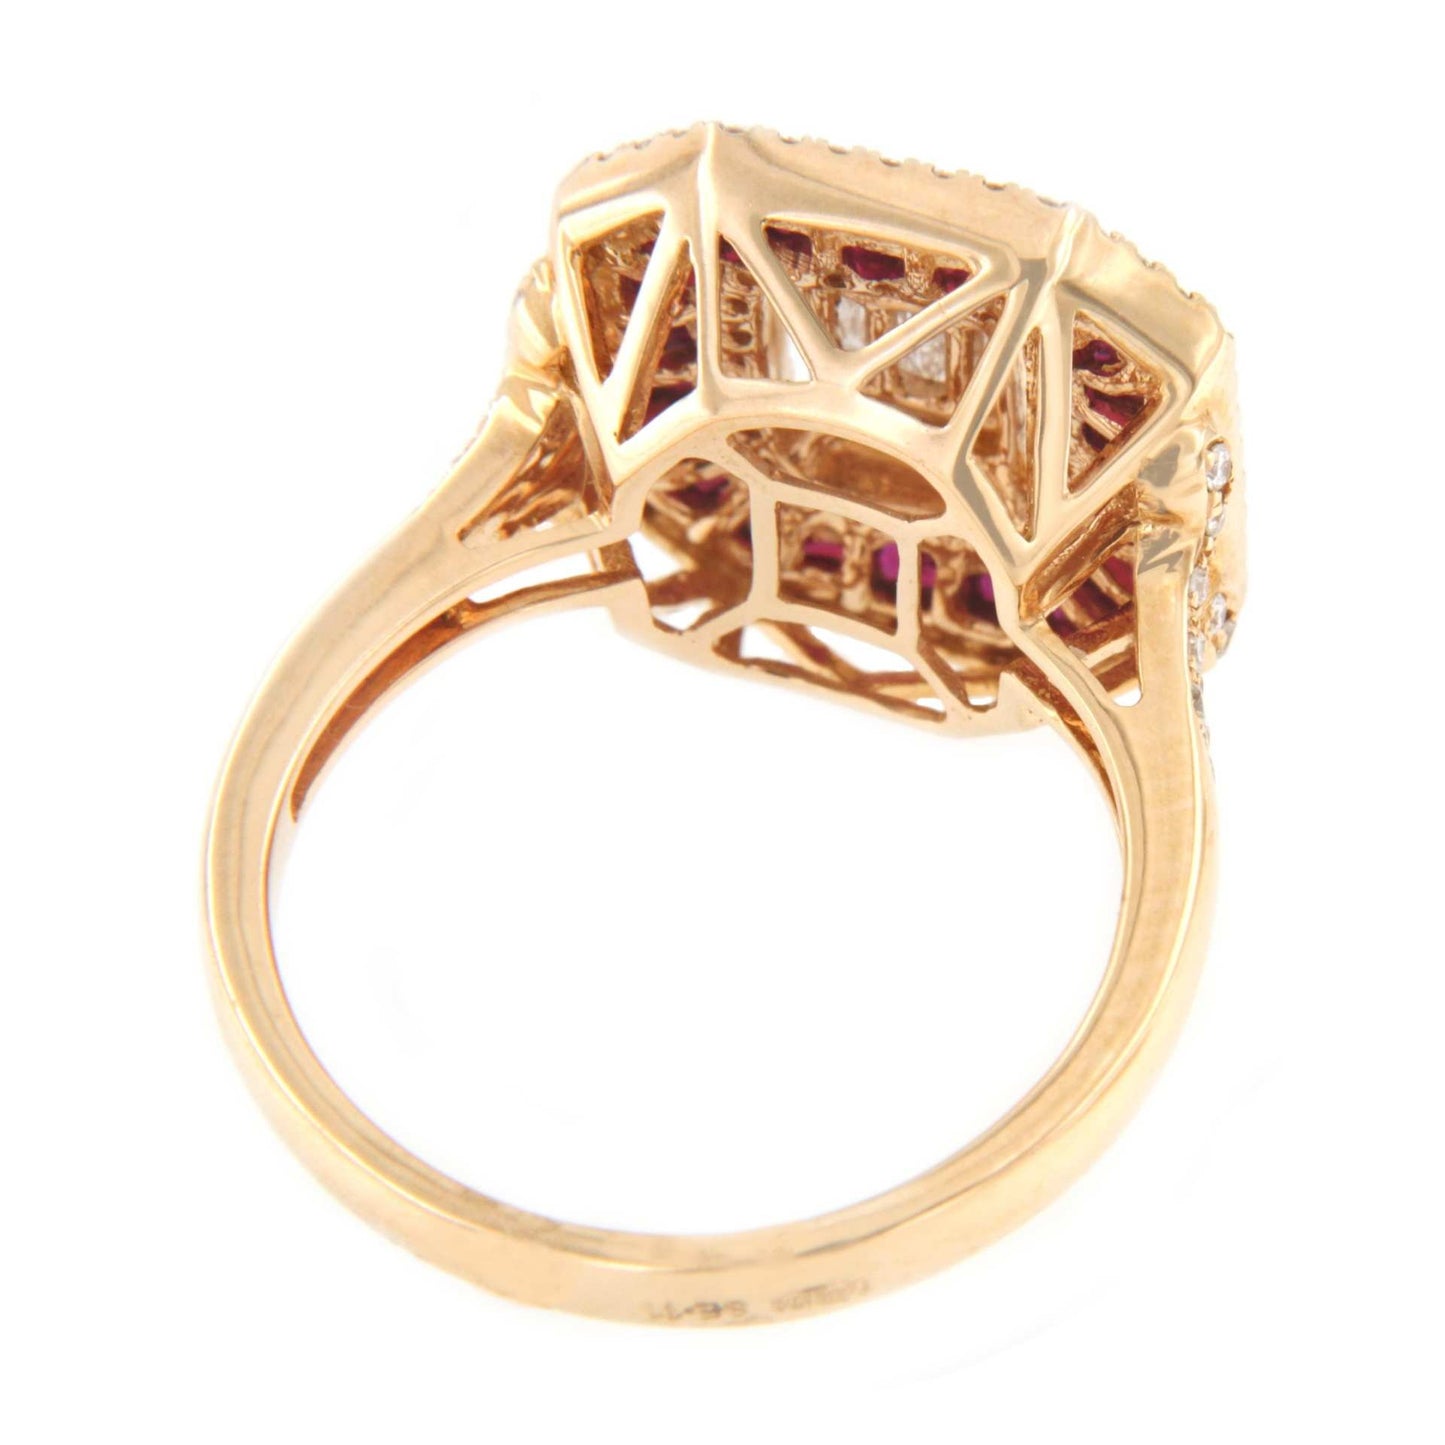 CYGNUS anillo rectangular oro blanco brillantes y zafiros